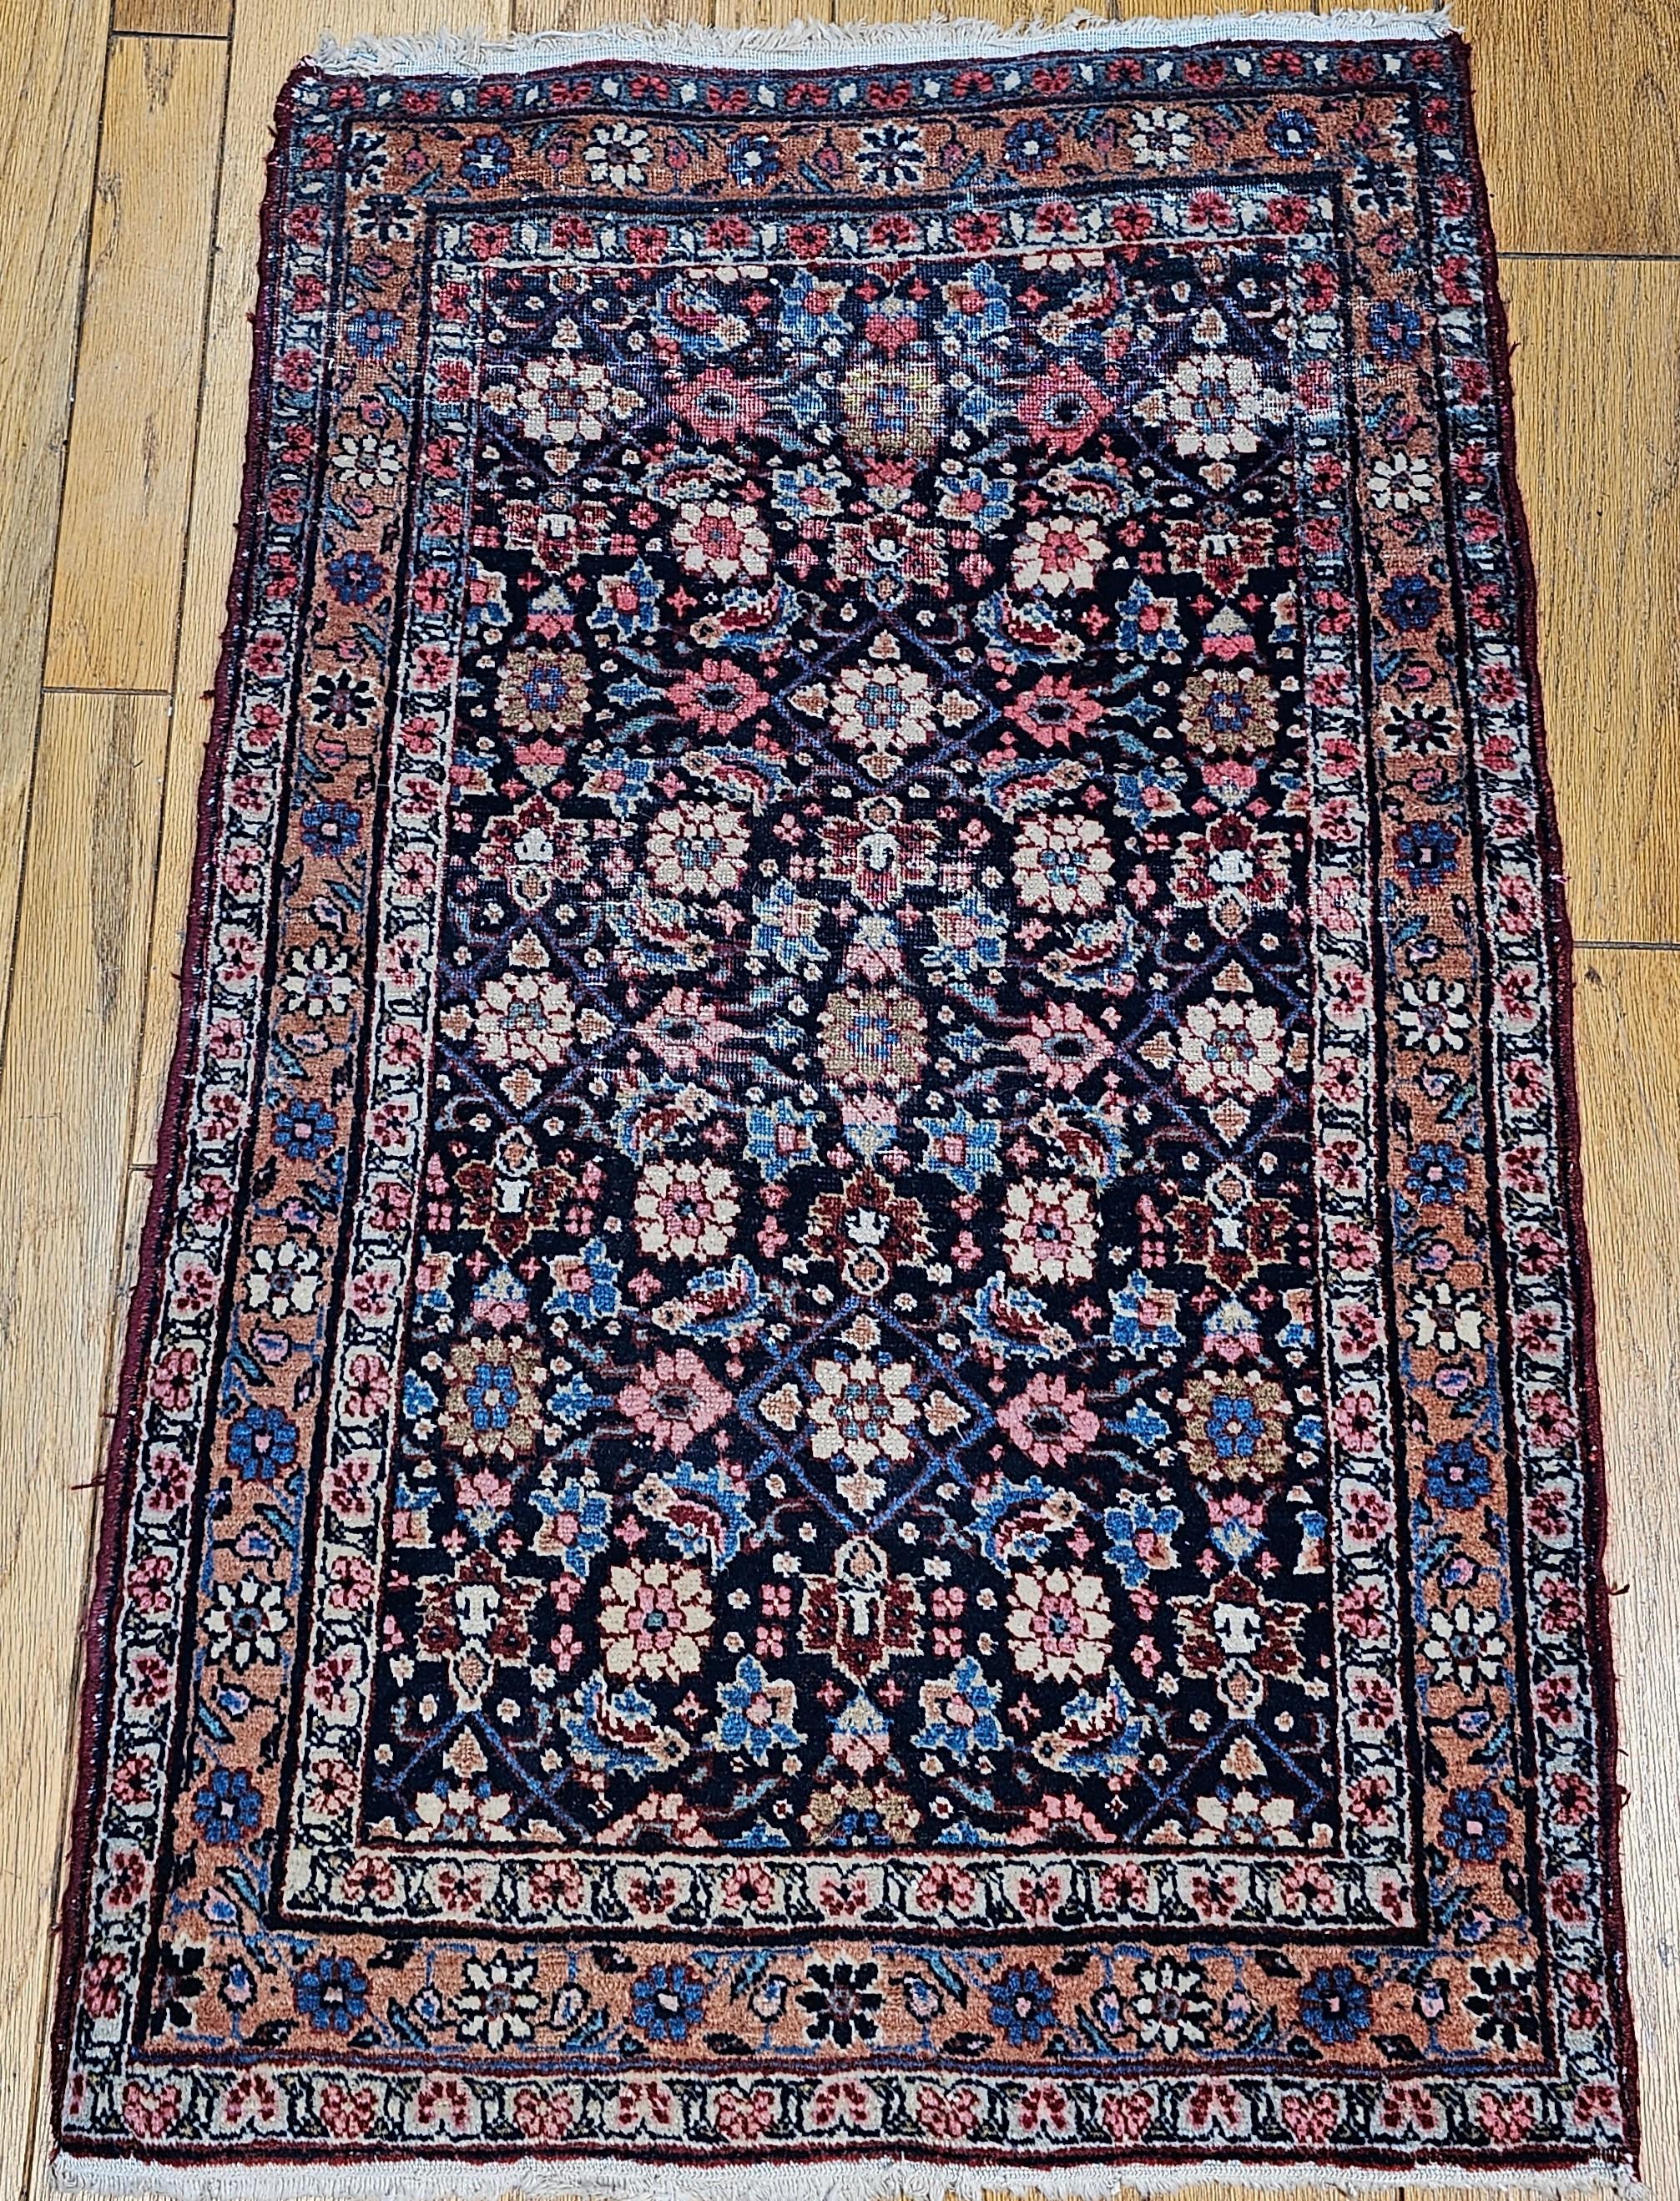 A beautiful Persian Malayer area rug from Western Persia in an 